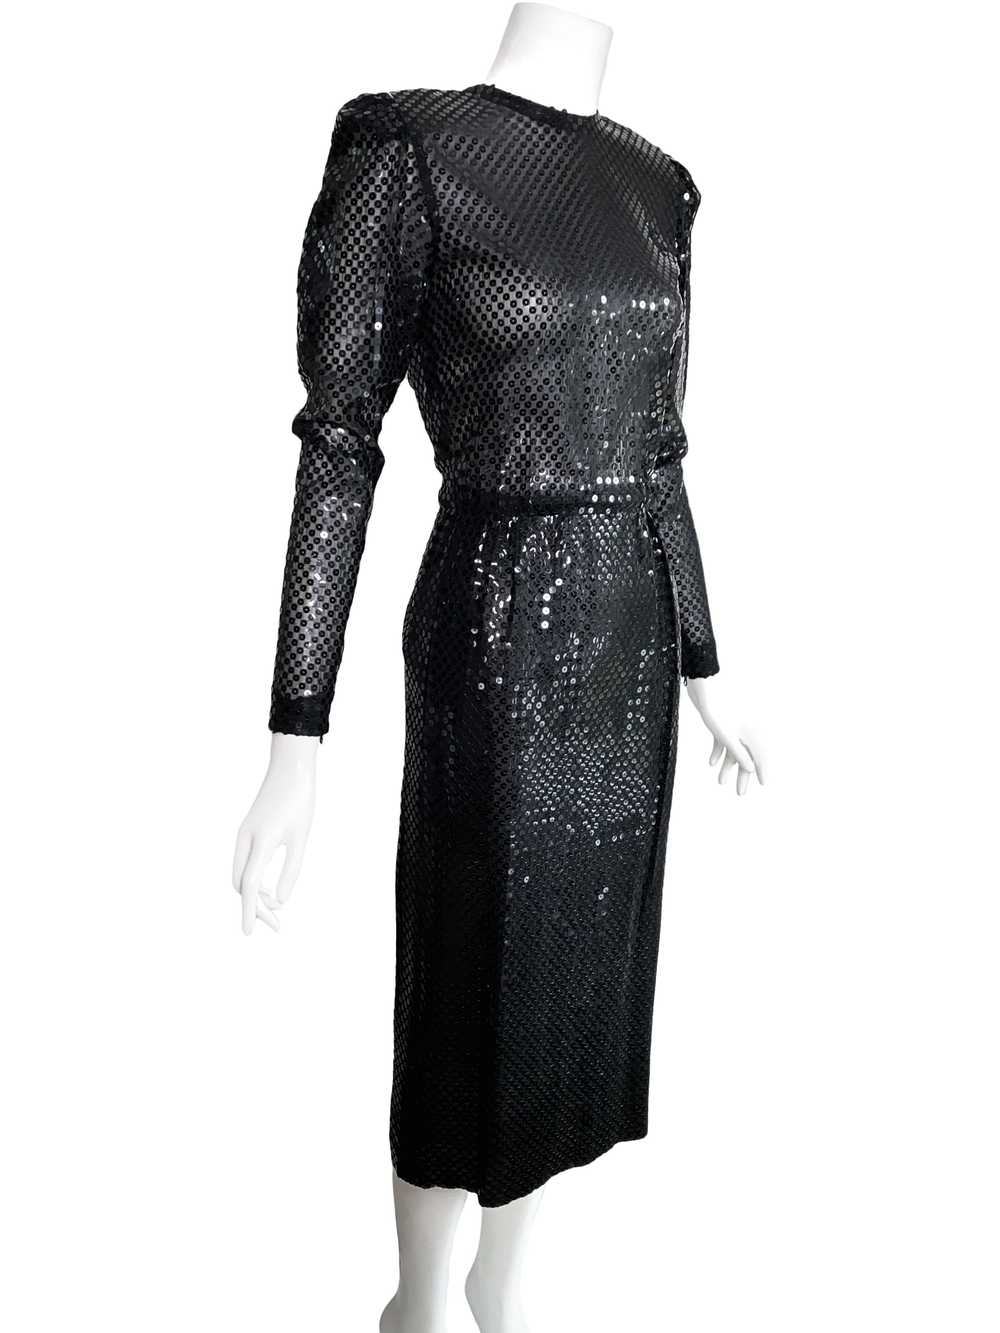 Givenchy Boutique 1970s Sequin Midi Dress - image 4